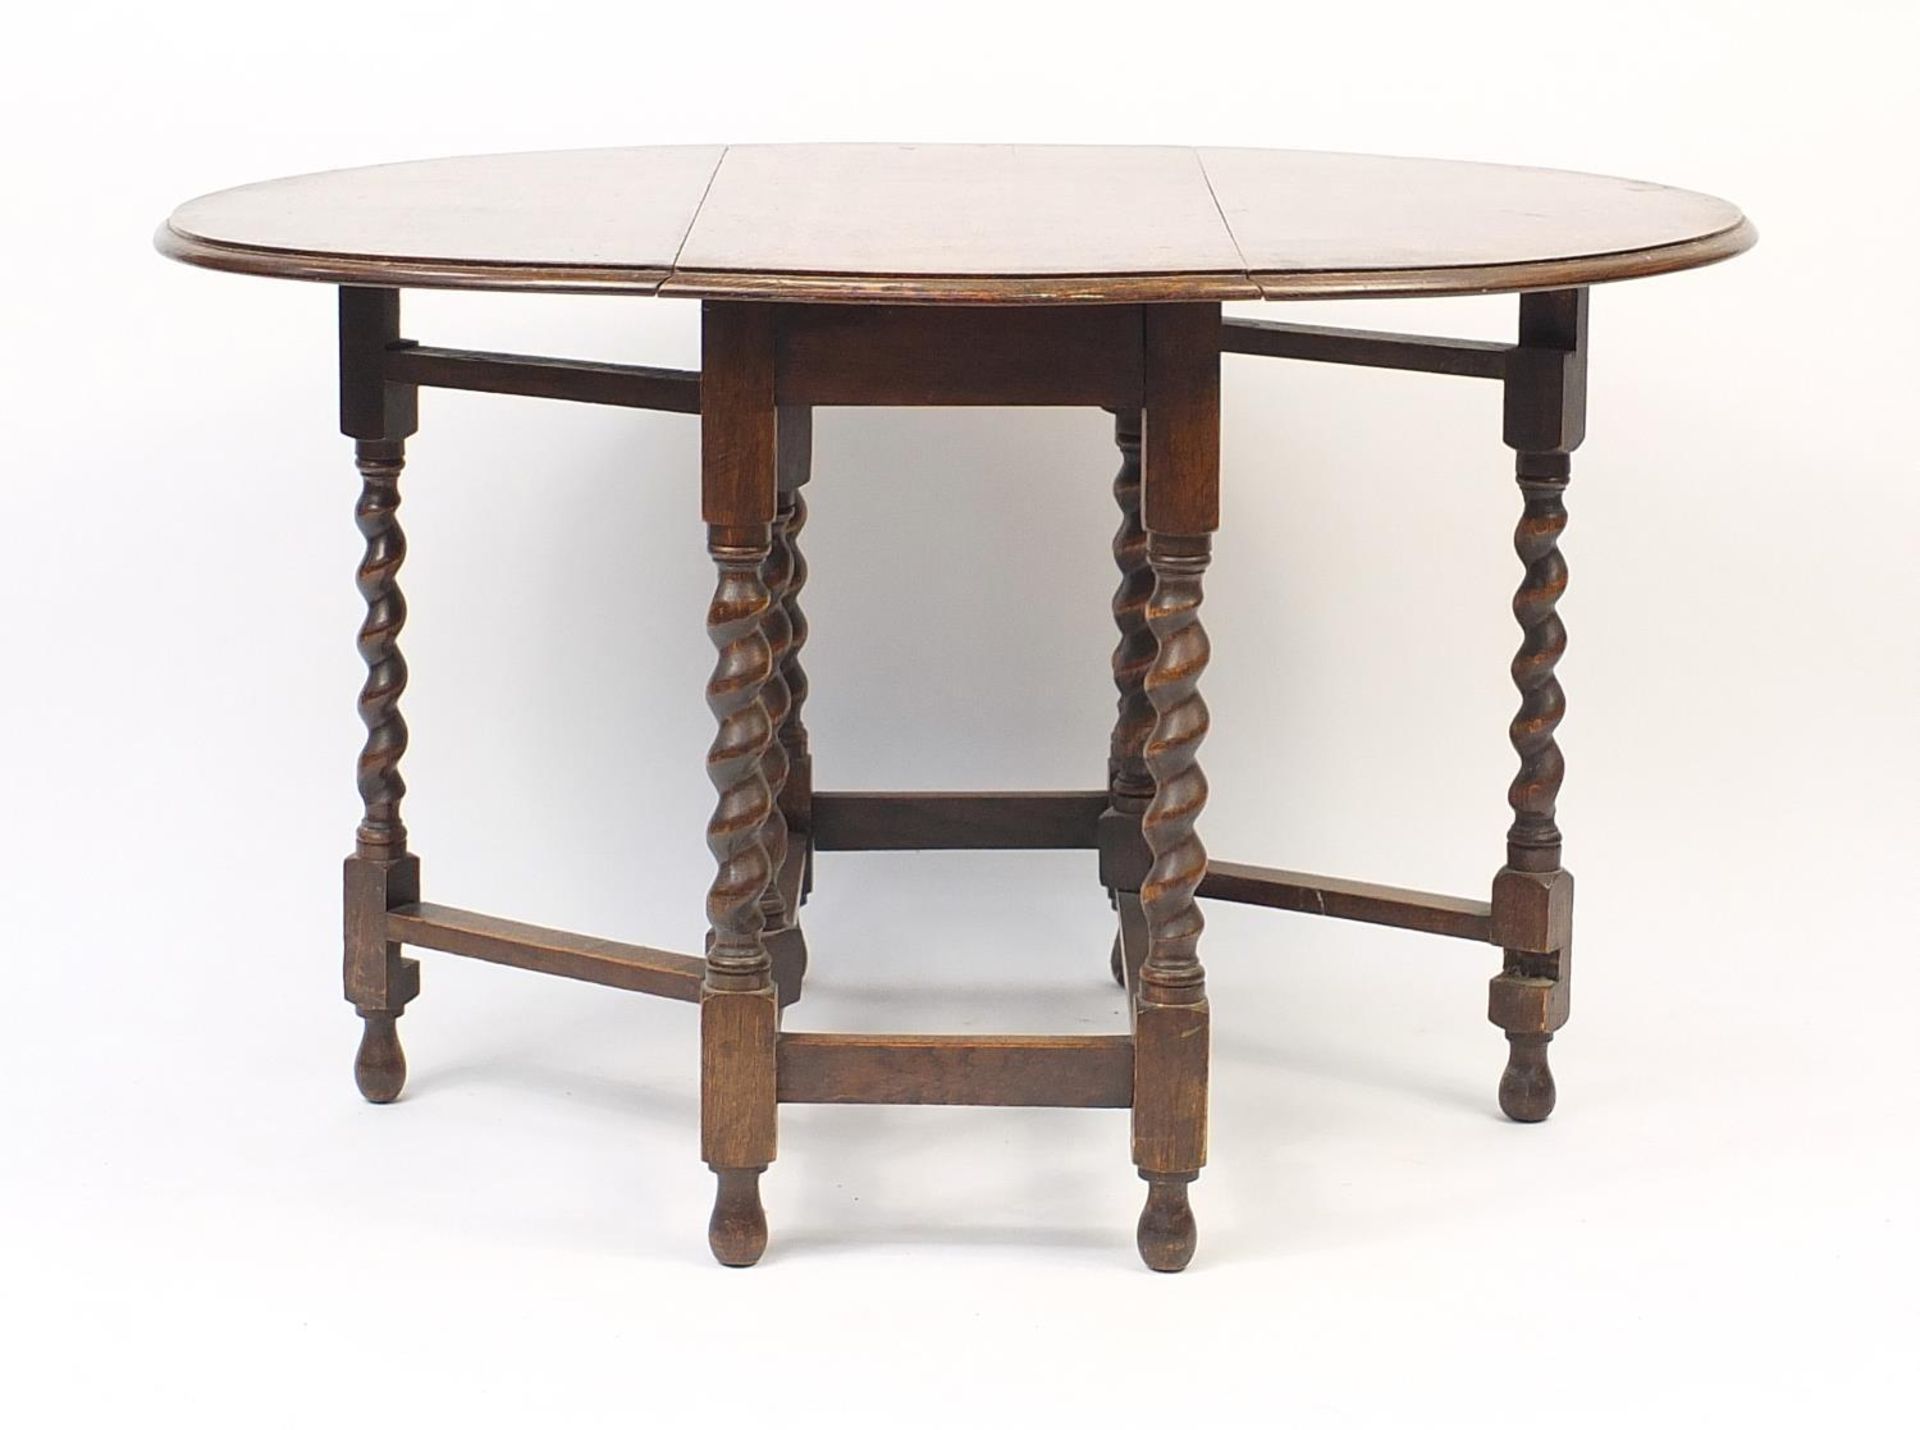 Oval oak gate leg table with barley twist legs, 73cm H x x 92cm W x 42cm D when closed : - Image 4 of 4